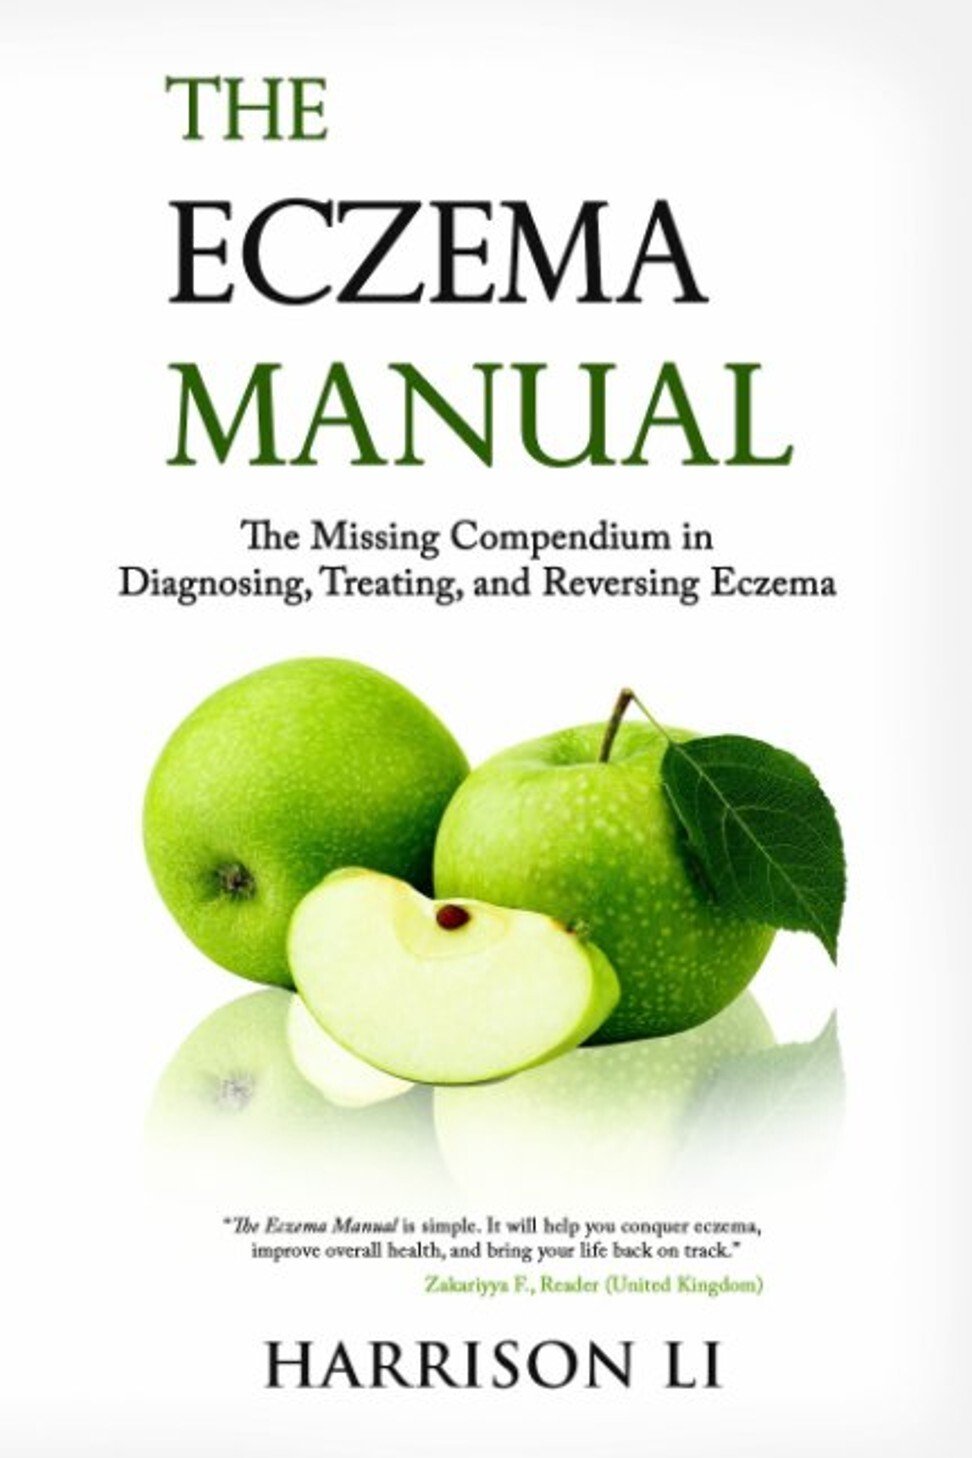 The Eczema Manual by Harrison Li.